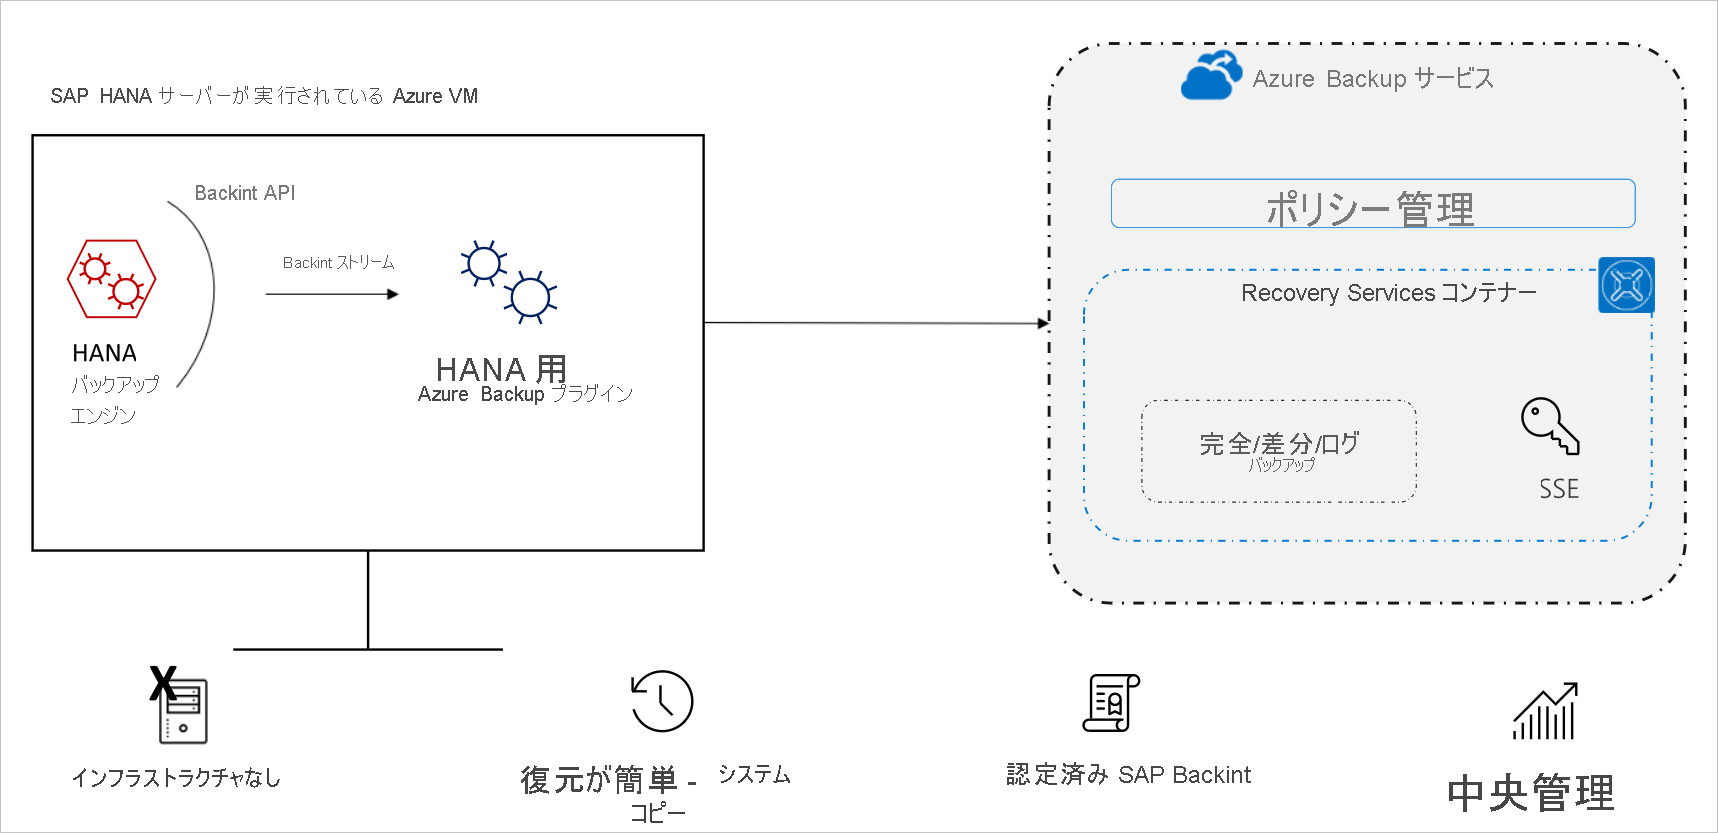 Diagram showing the backup process of SAP HANA database.